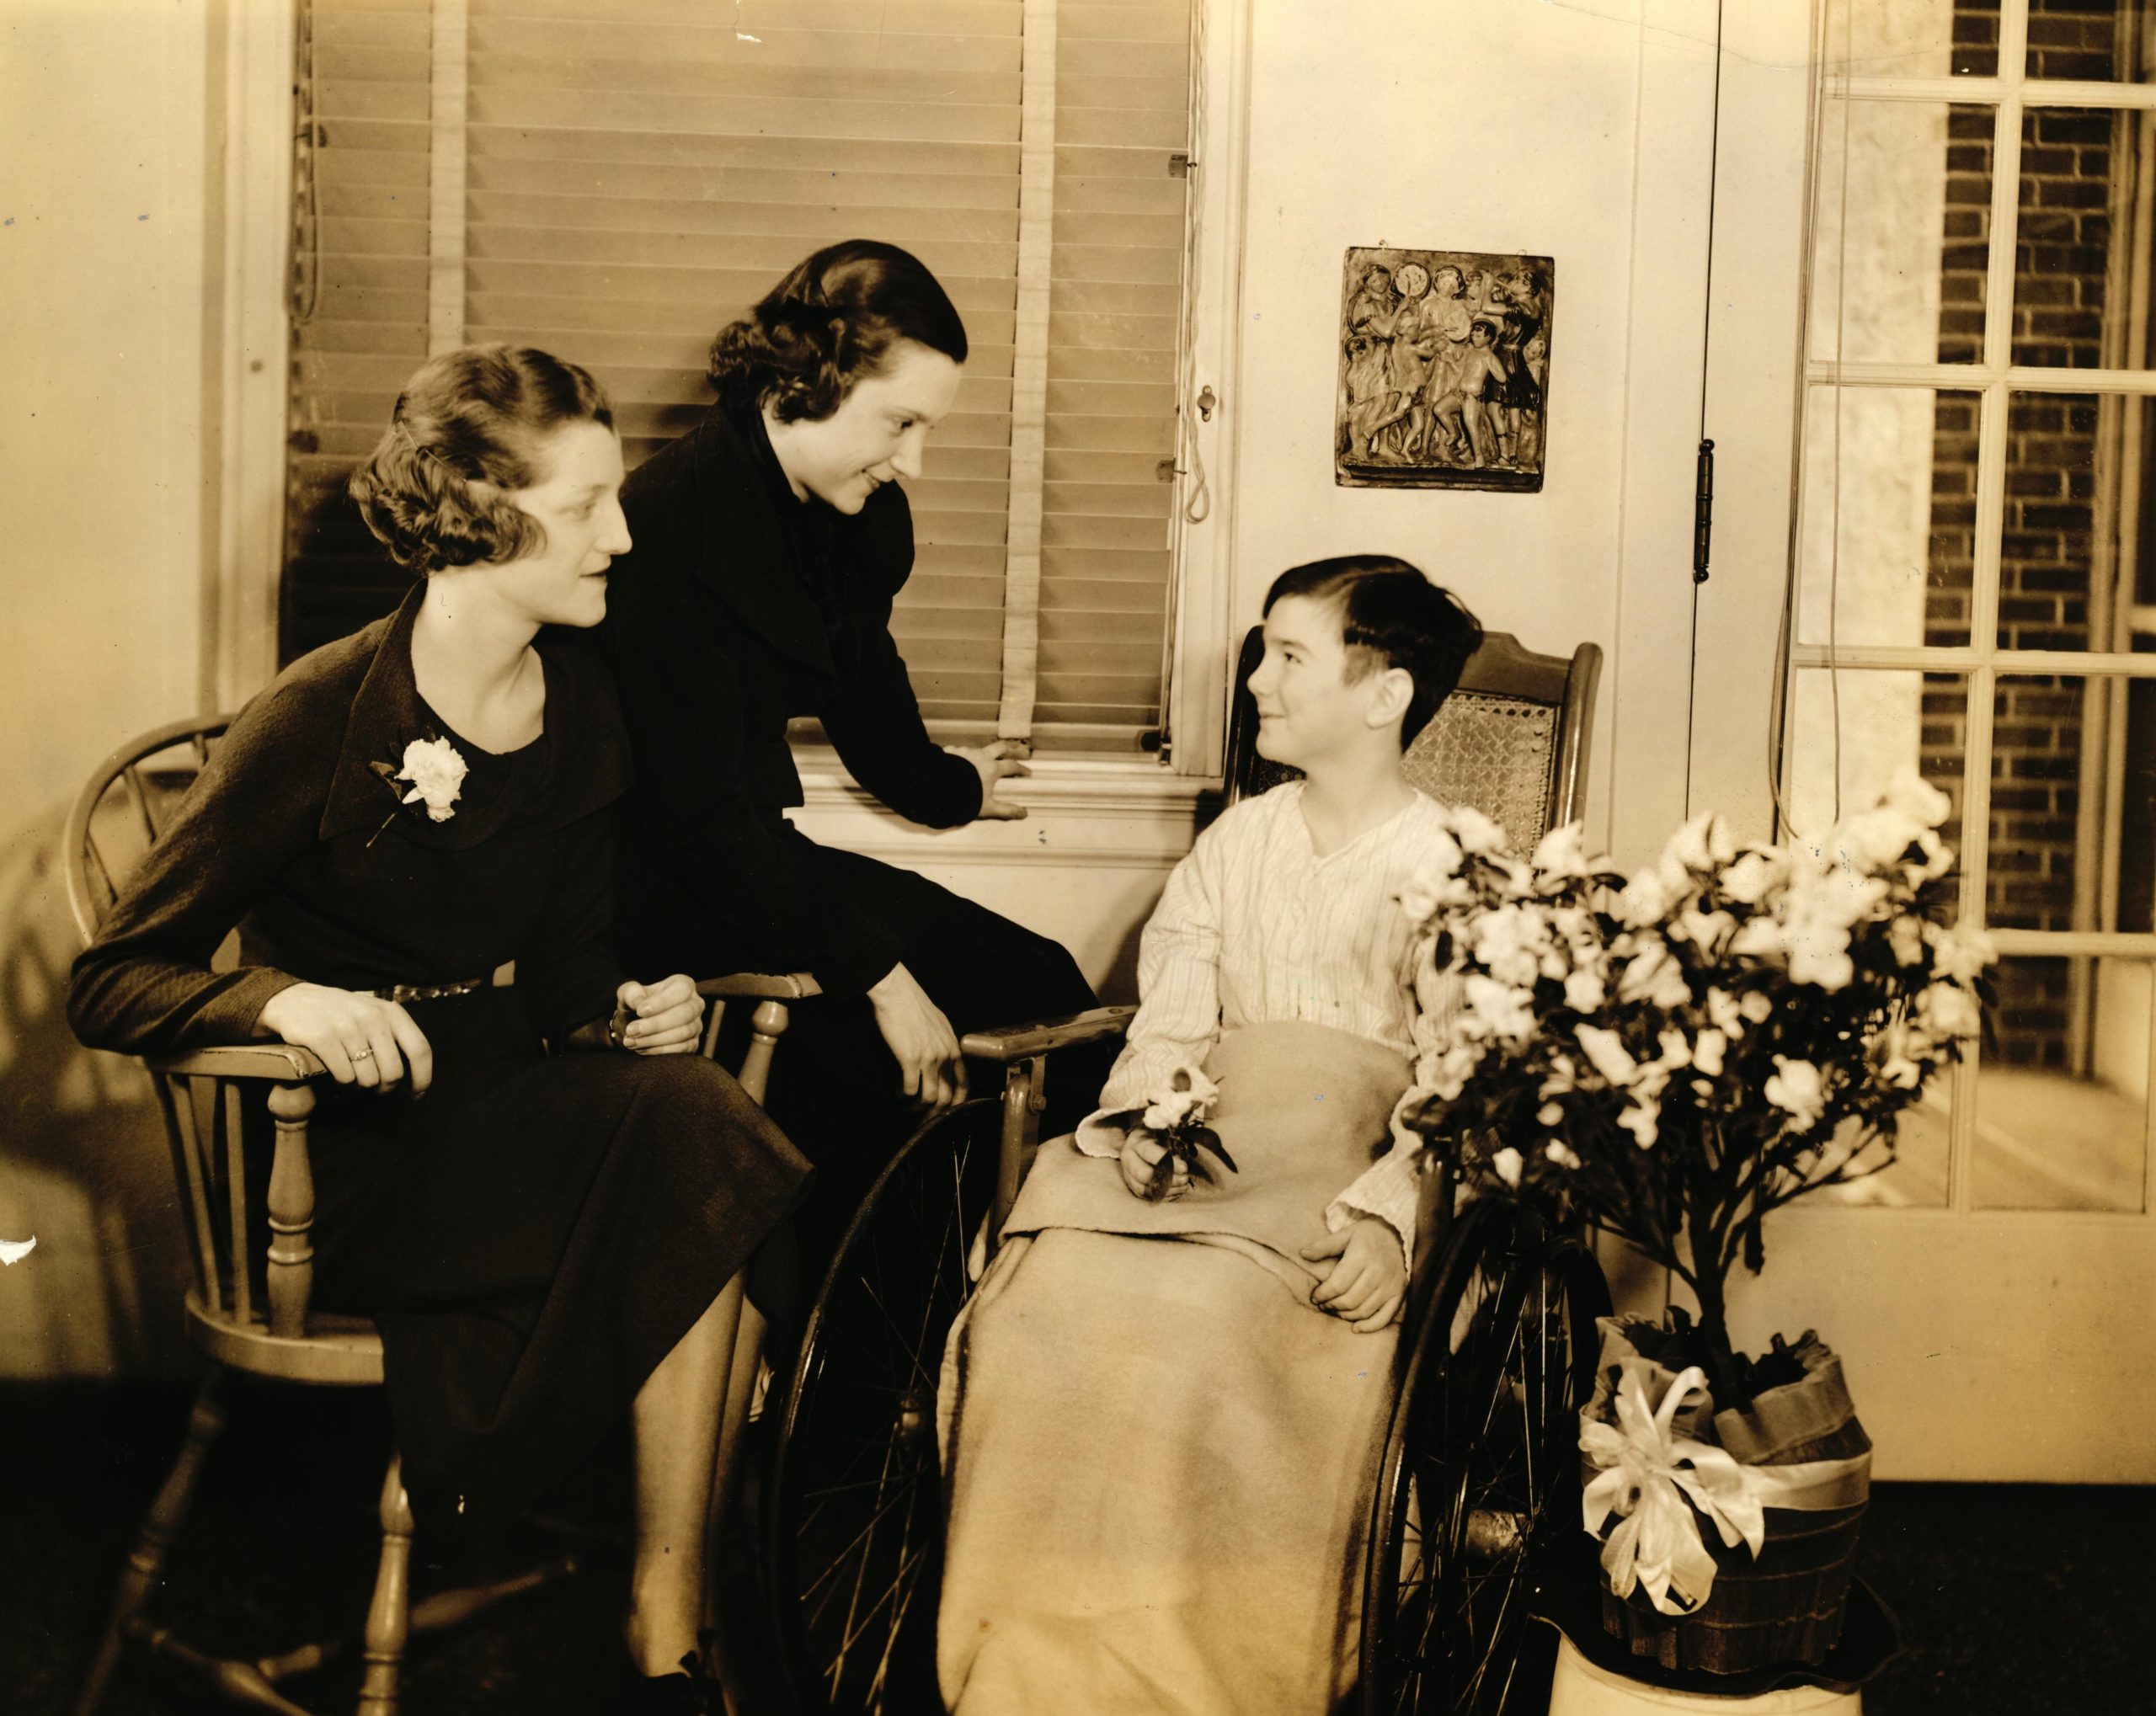 Children's Hospital Association members visit a boy, circa 1930s.